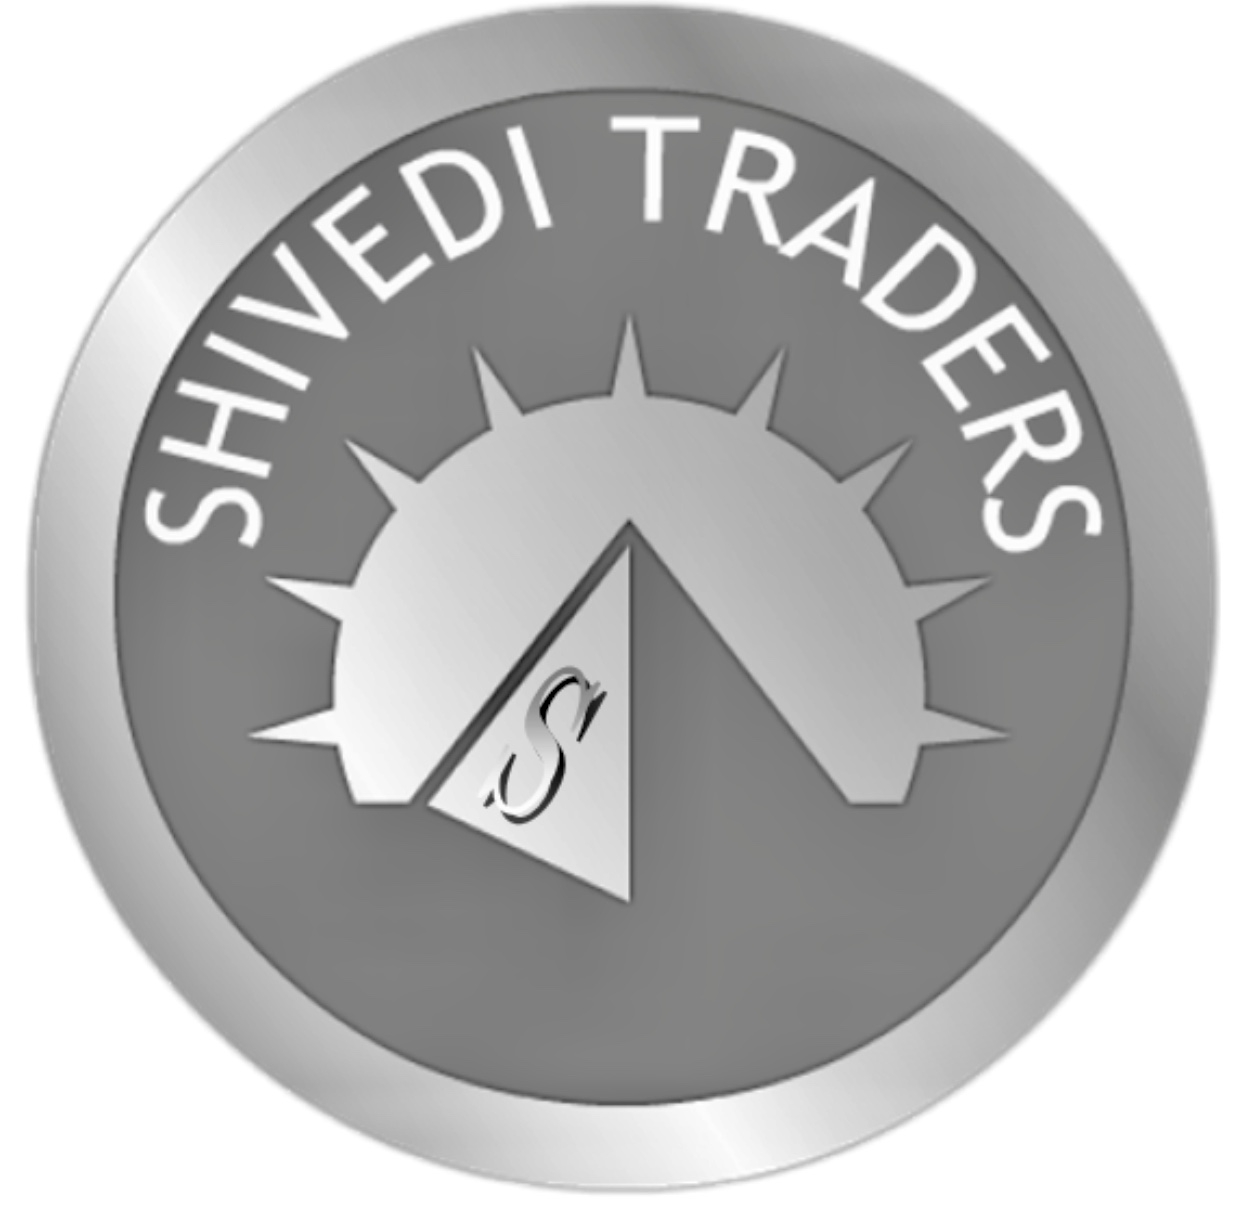 Shivedi Traders logo